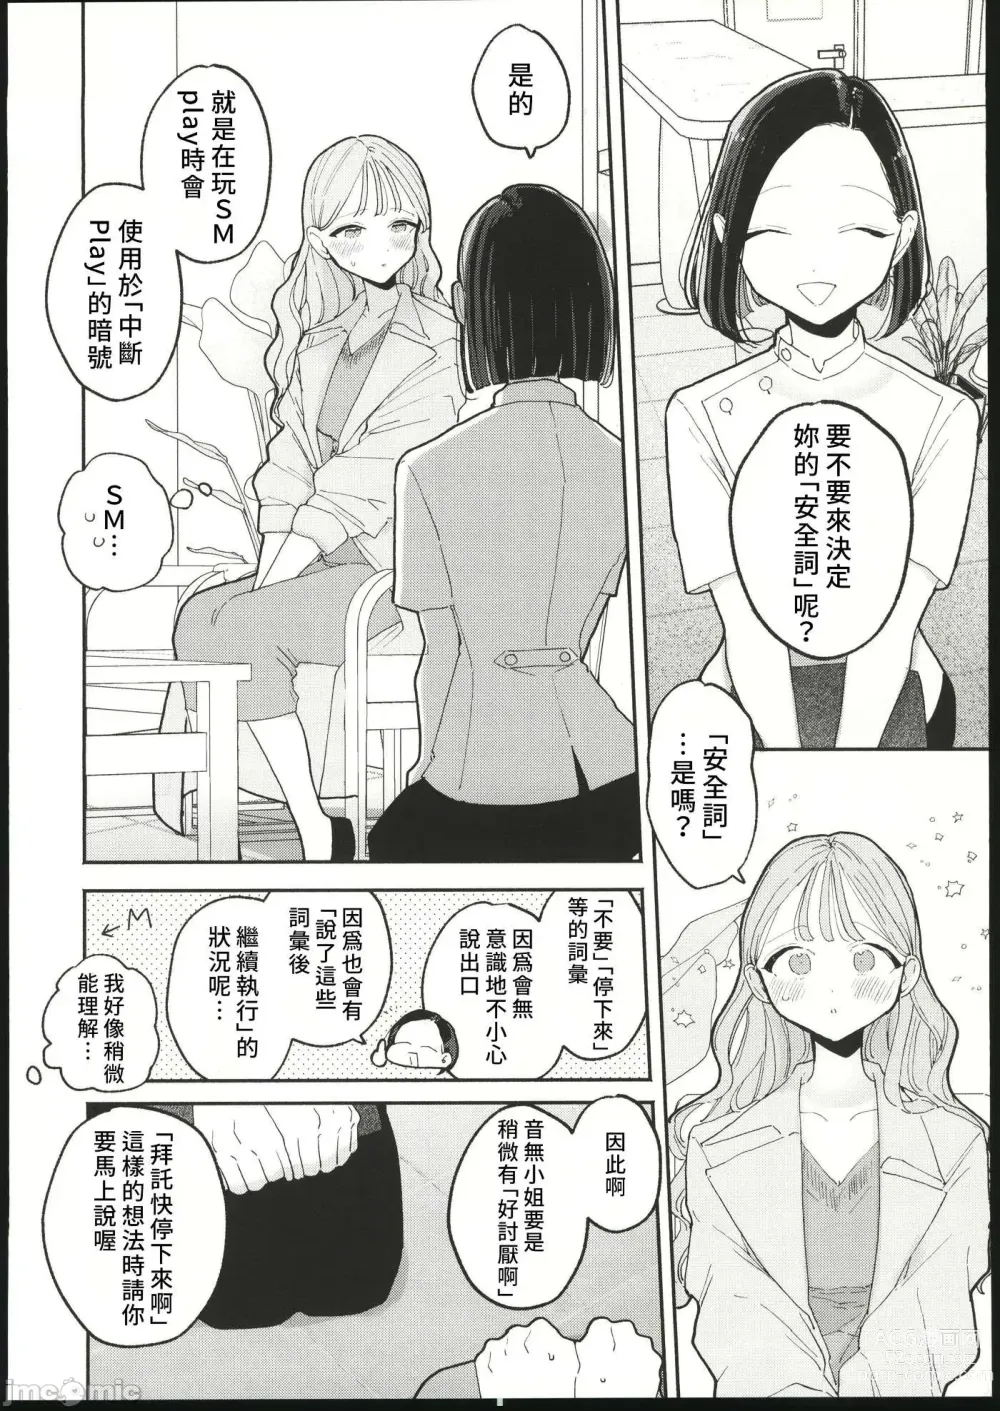 Page 6 of manga 絶頂リフレ 駅前の性感マッサージ店で○○になっちゃ